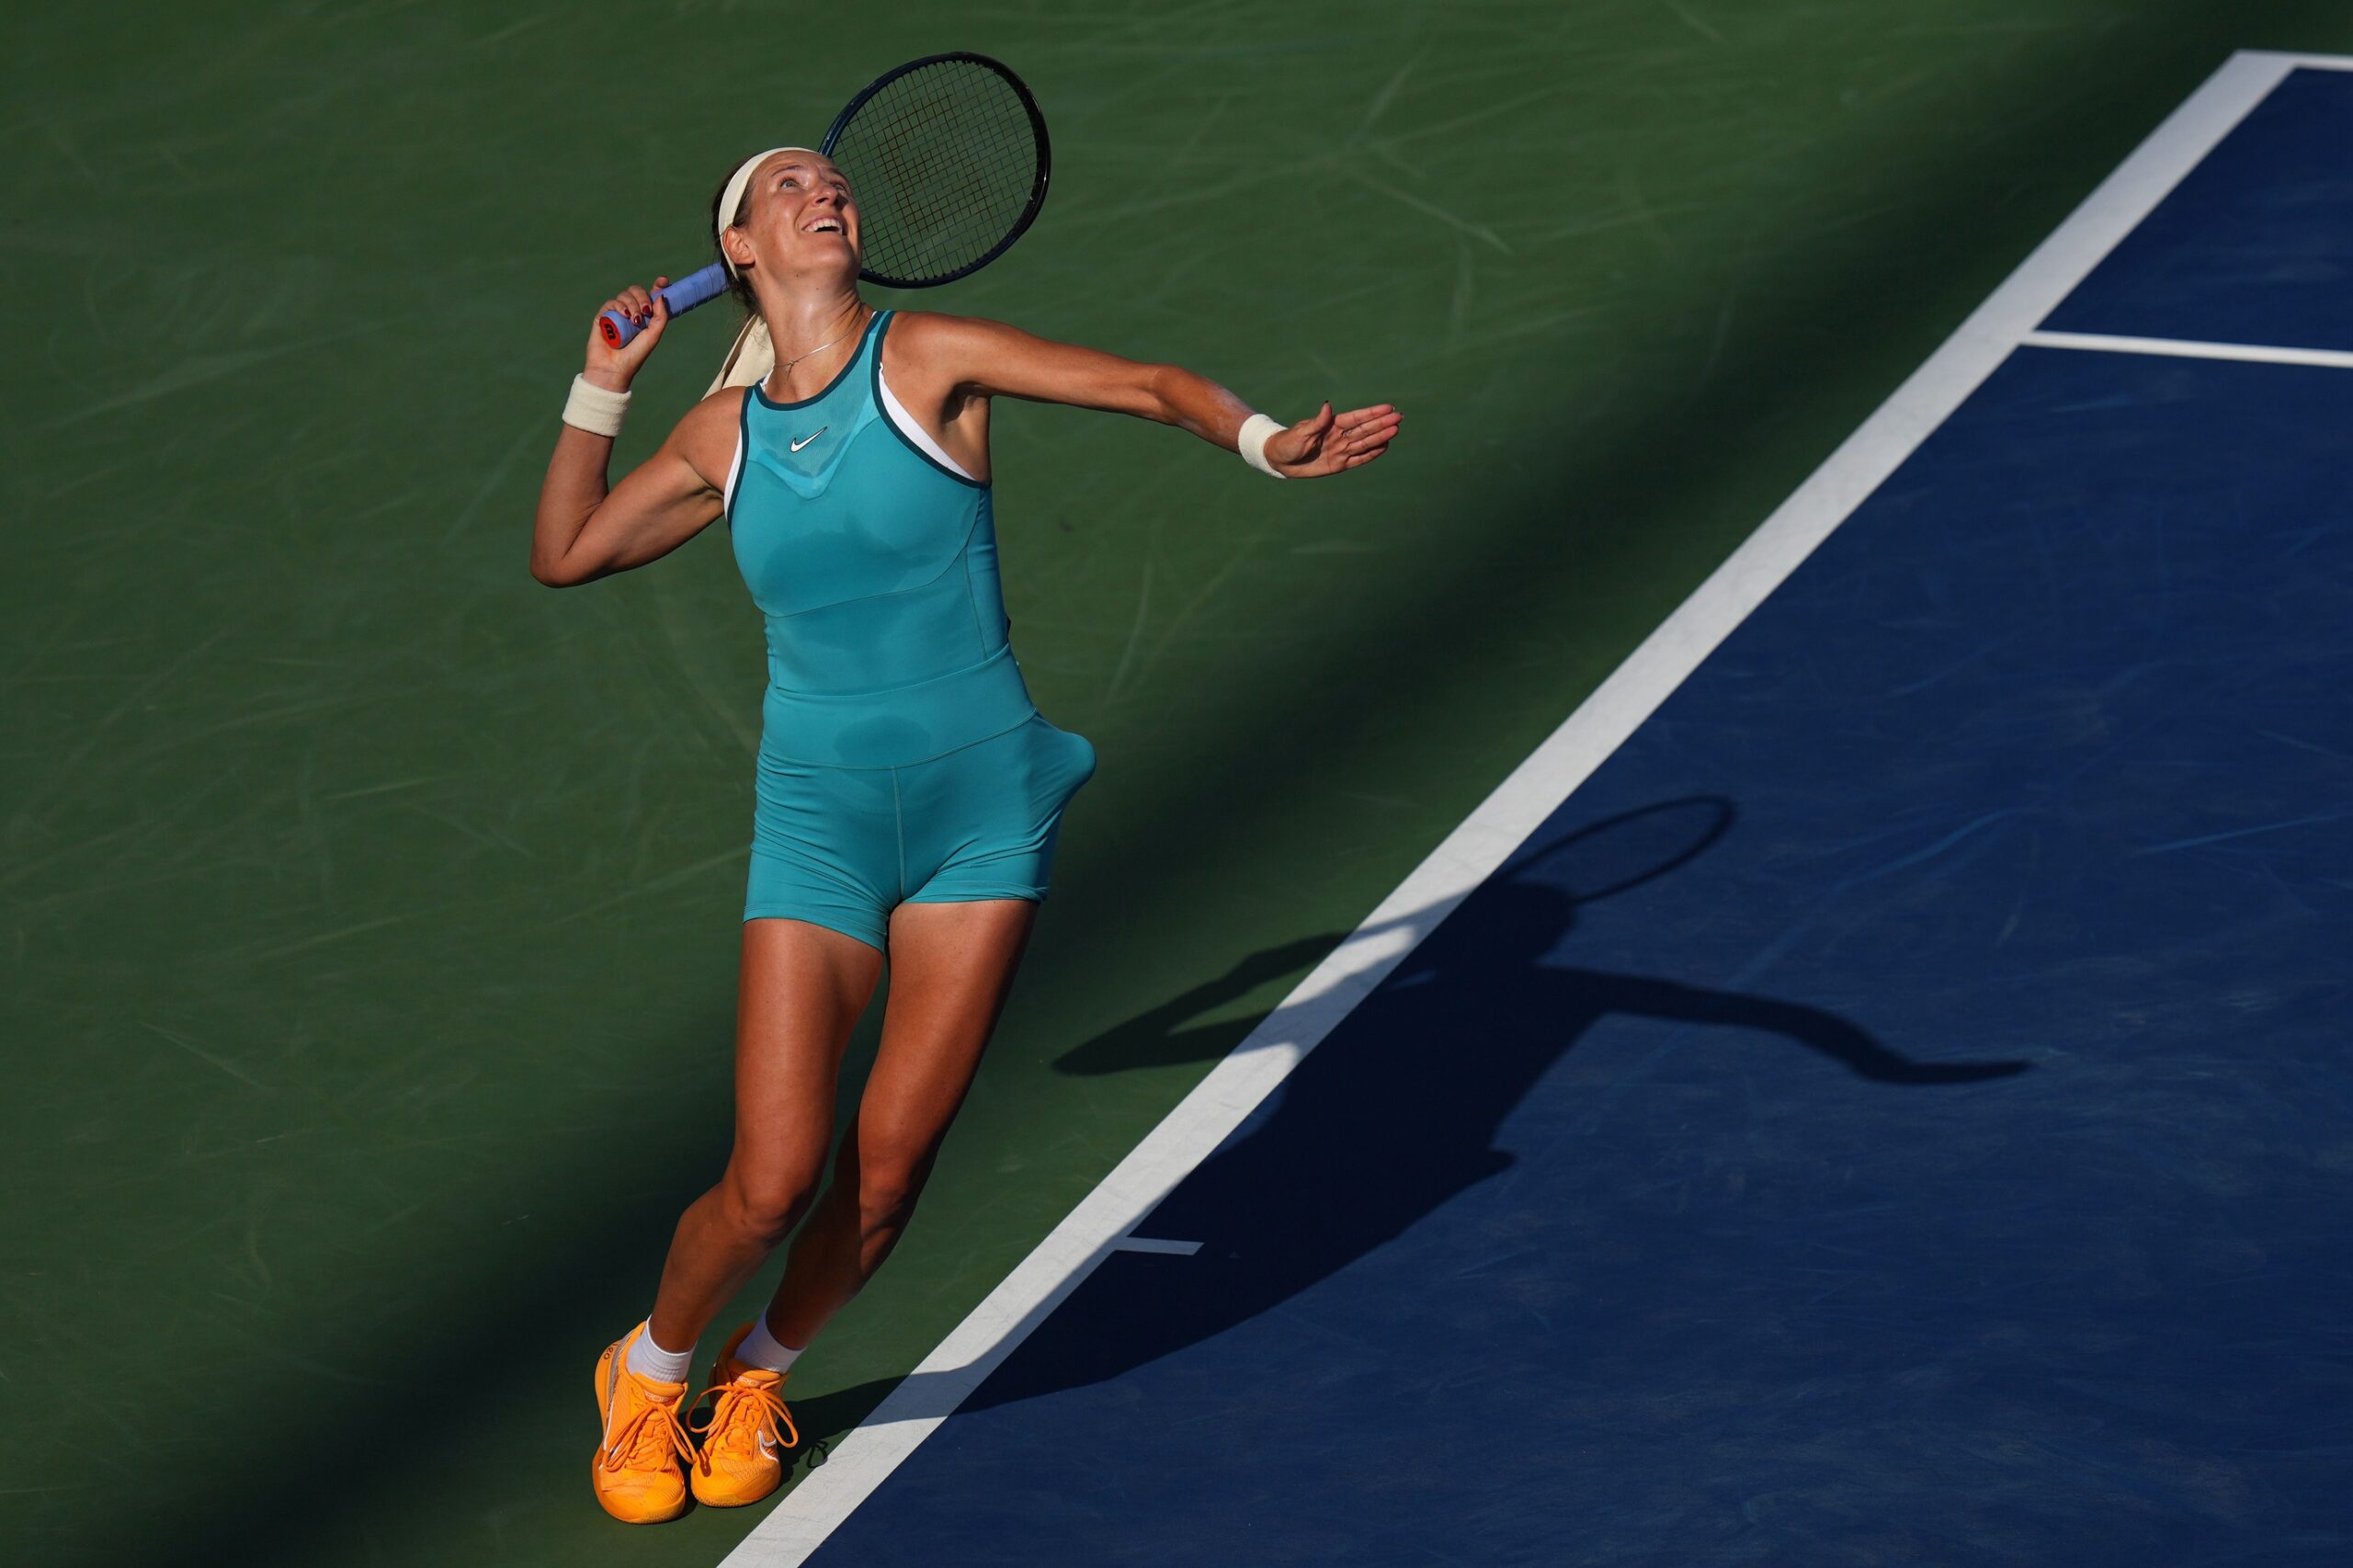 Victoria Azarenka in action ahead of the Australian Open.